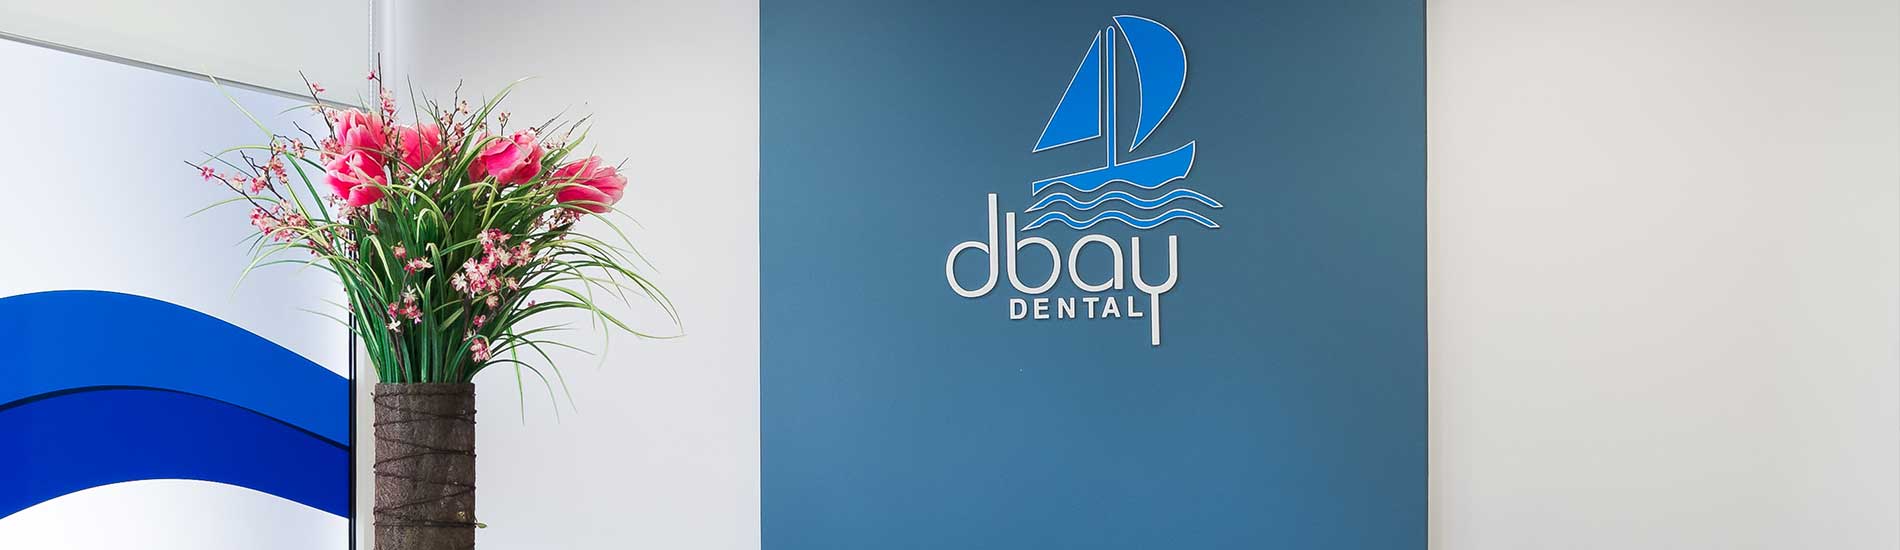 Photo of DBay Dental Reception Area